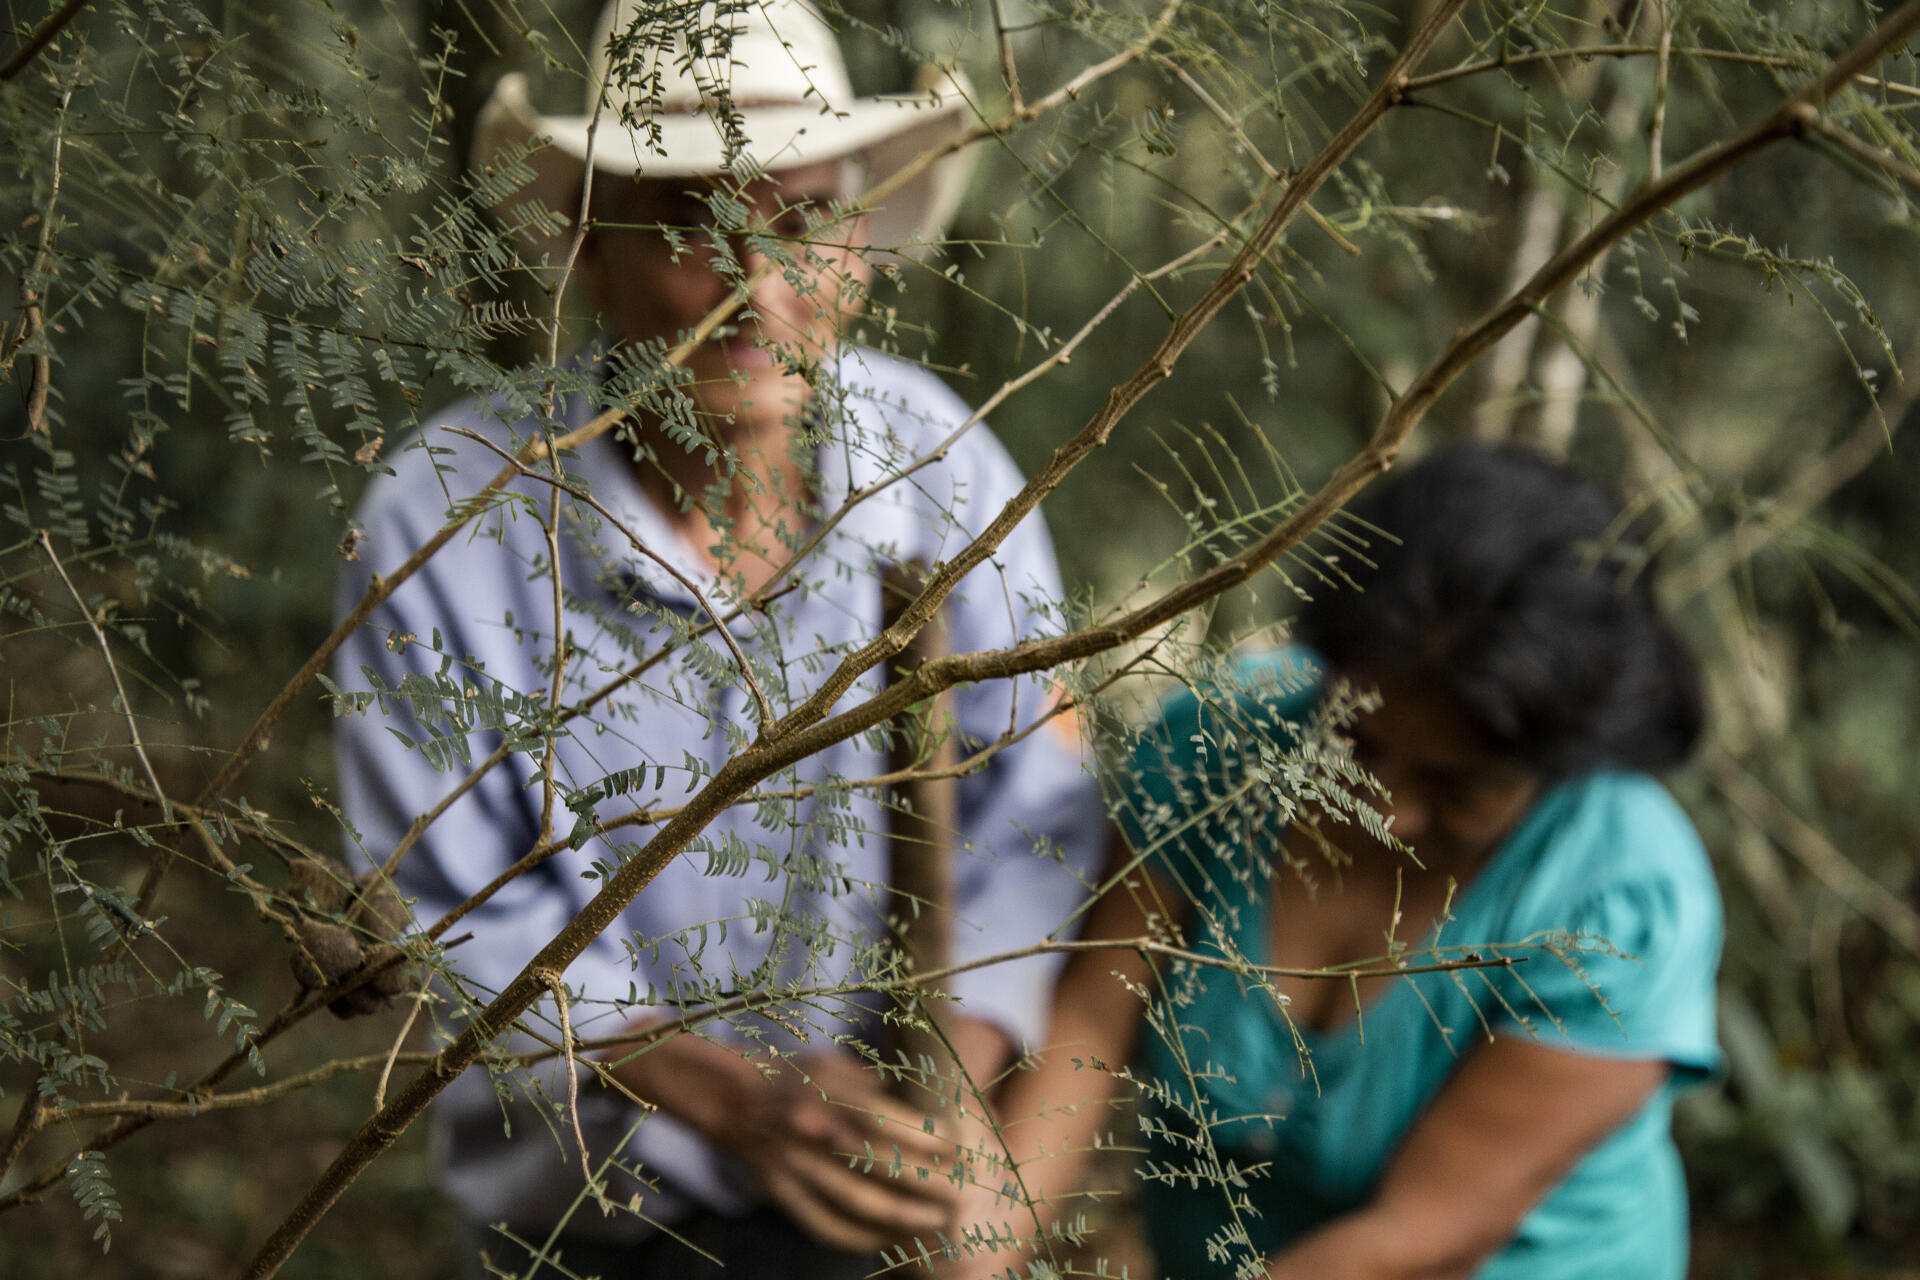 Rosalina García Sánchez and her husband Juanito García, beneficiaries of the “Sembrando vida” program, in José María Morelos, Chiapas, Mexico on November 17, 2021.